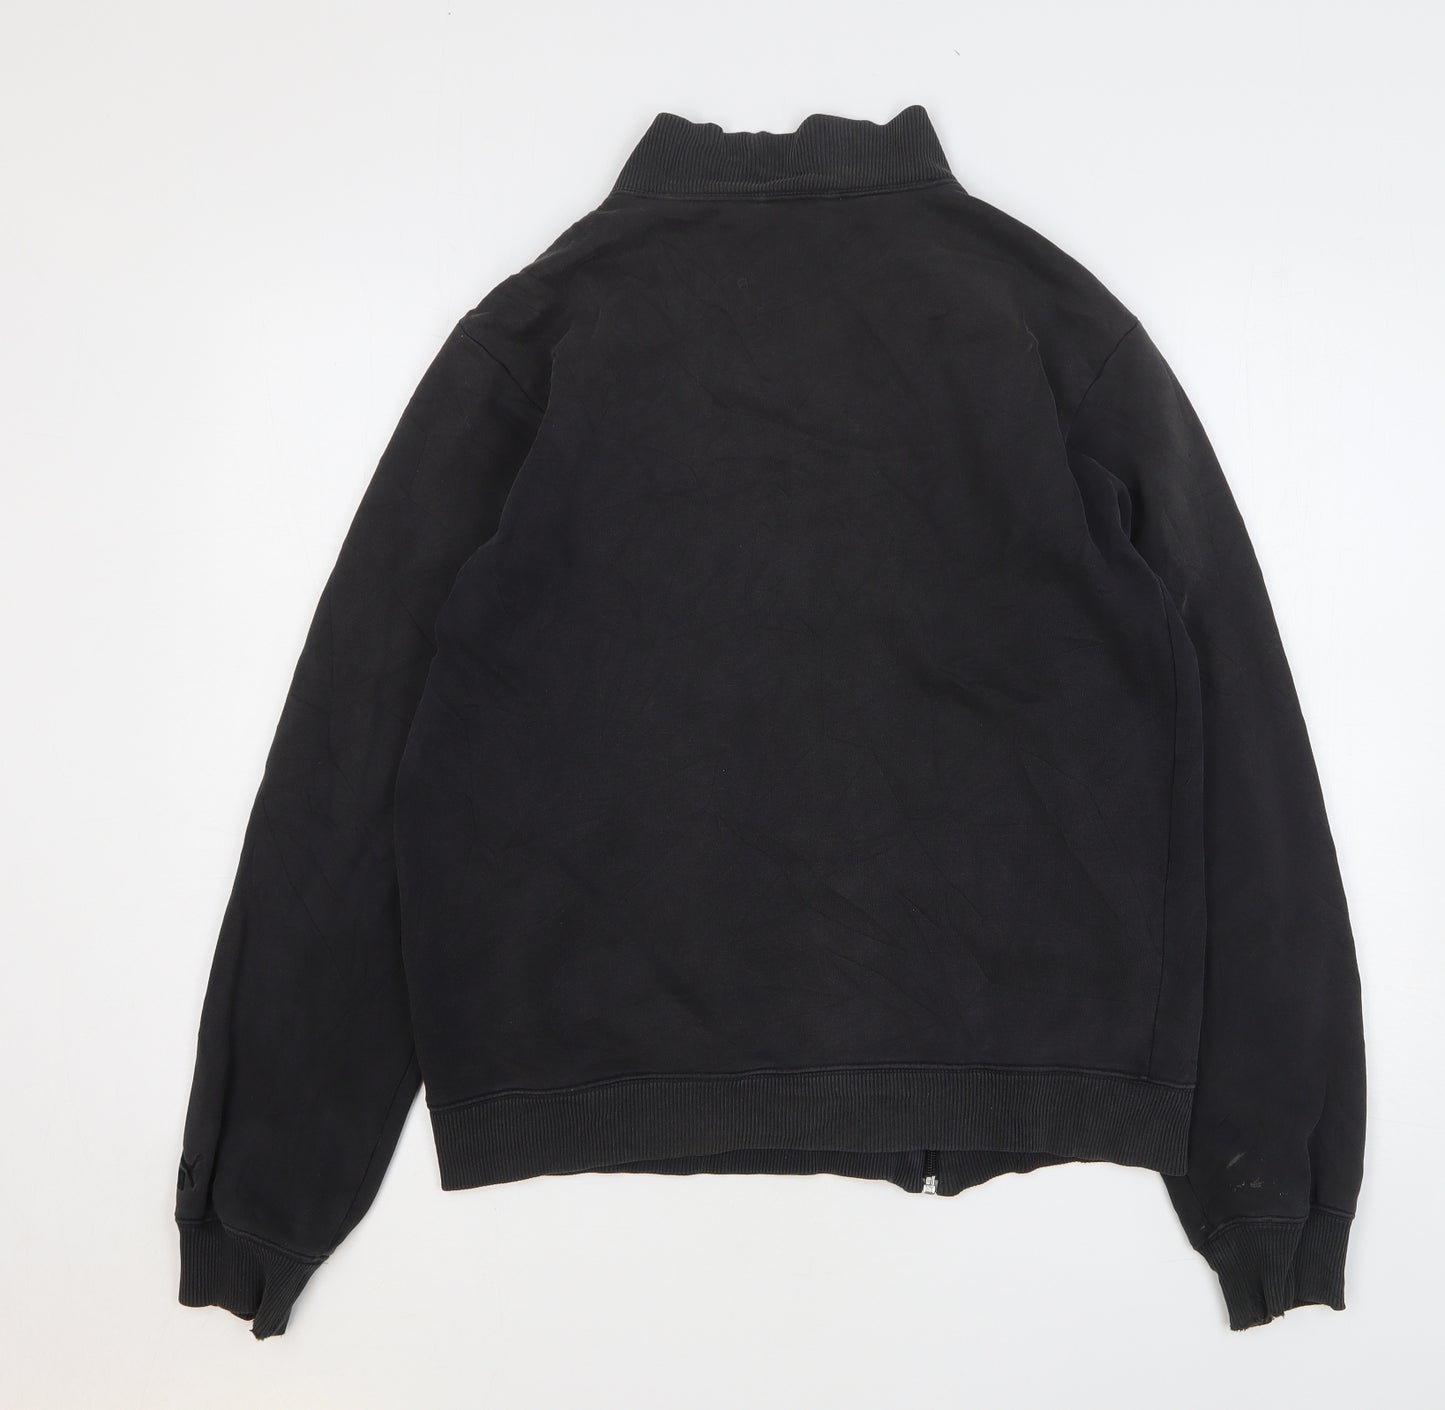 PUMA Mens Black Polyester Full Zip Sweatshirt Size M